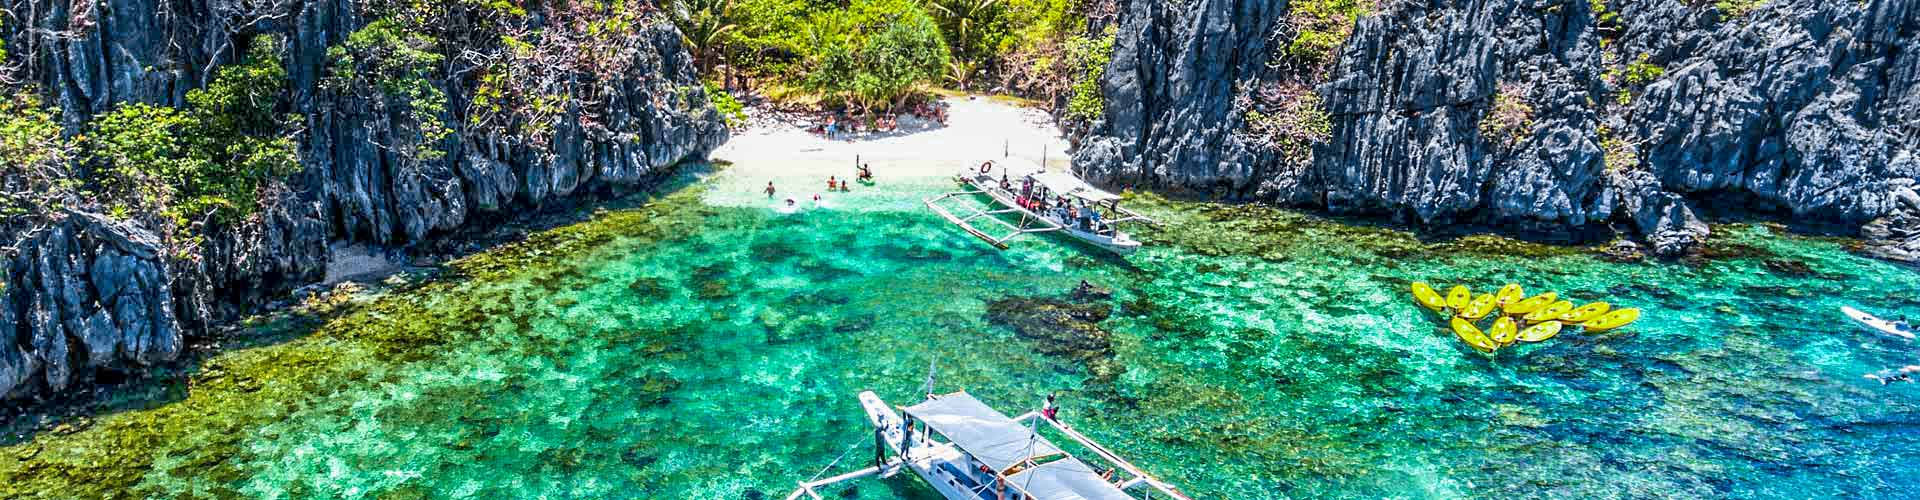 12 Days Philippines Palawan Adventure Tour (Manila - Coron - El Nido)